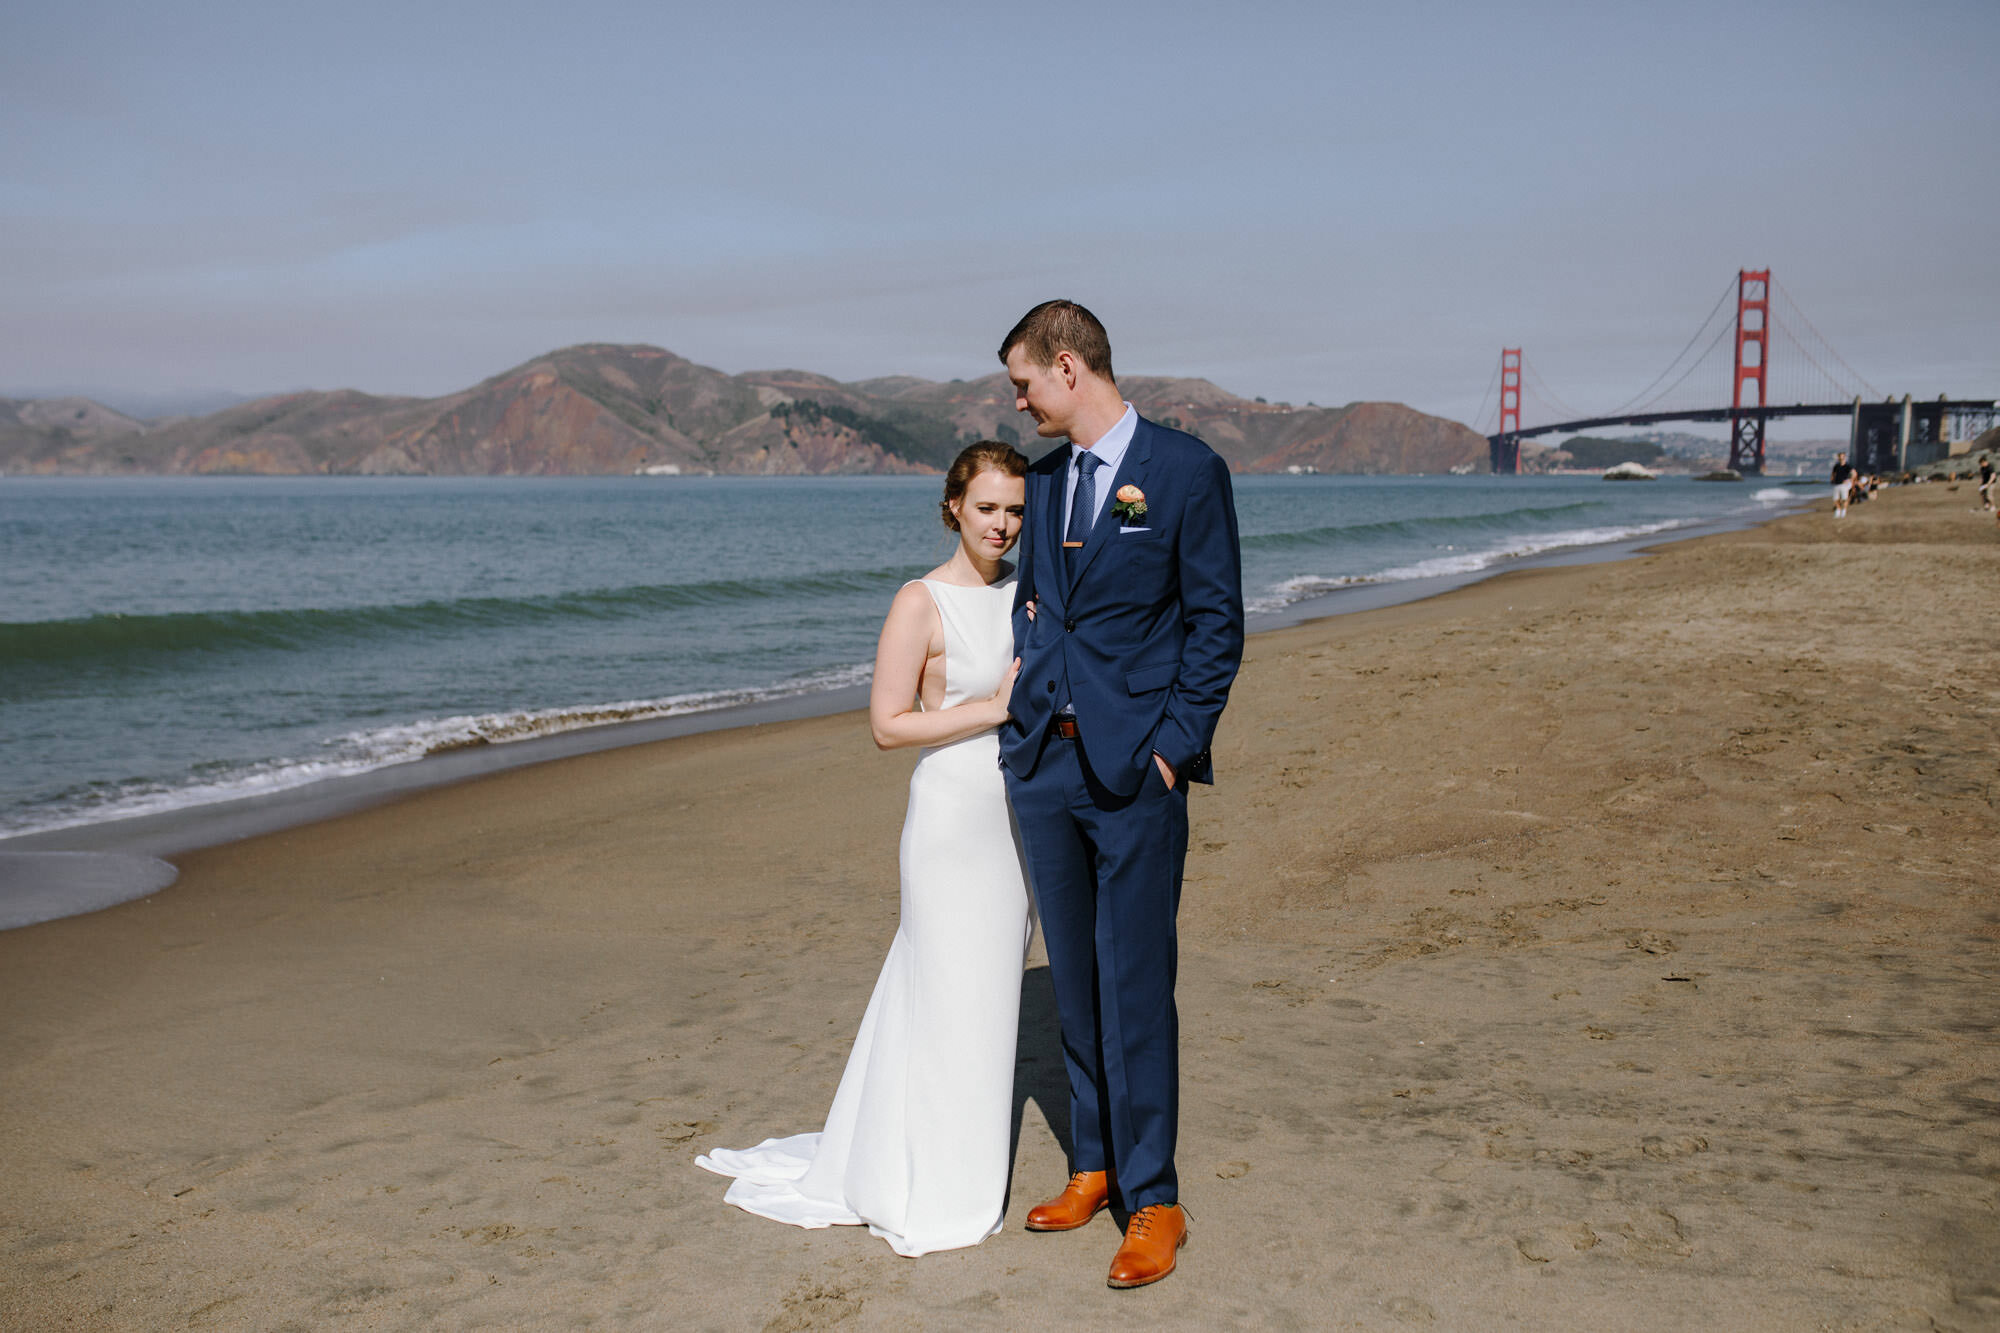 melissa-habegger-baker-beach-wedding-vows-019.jpg